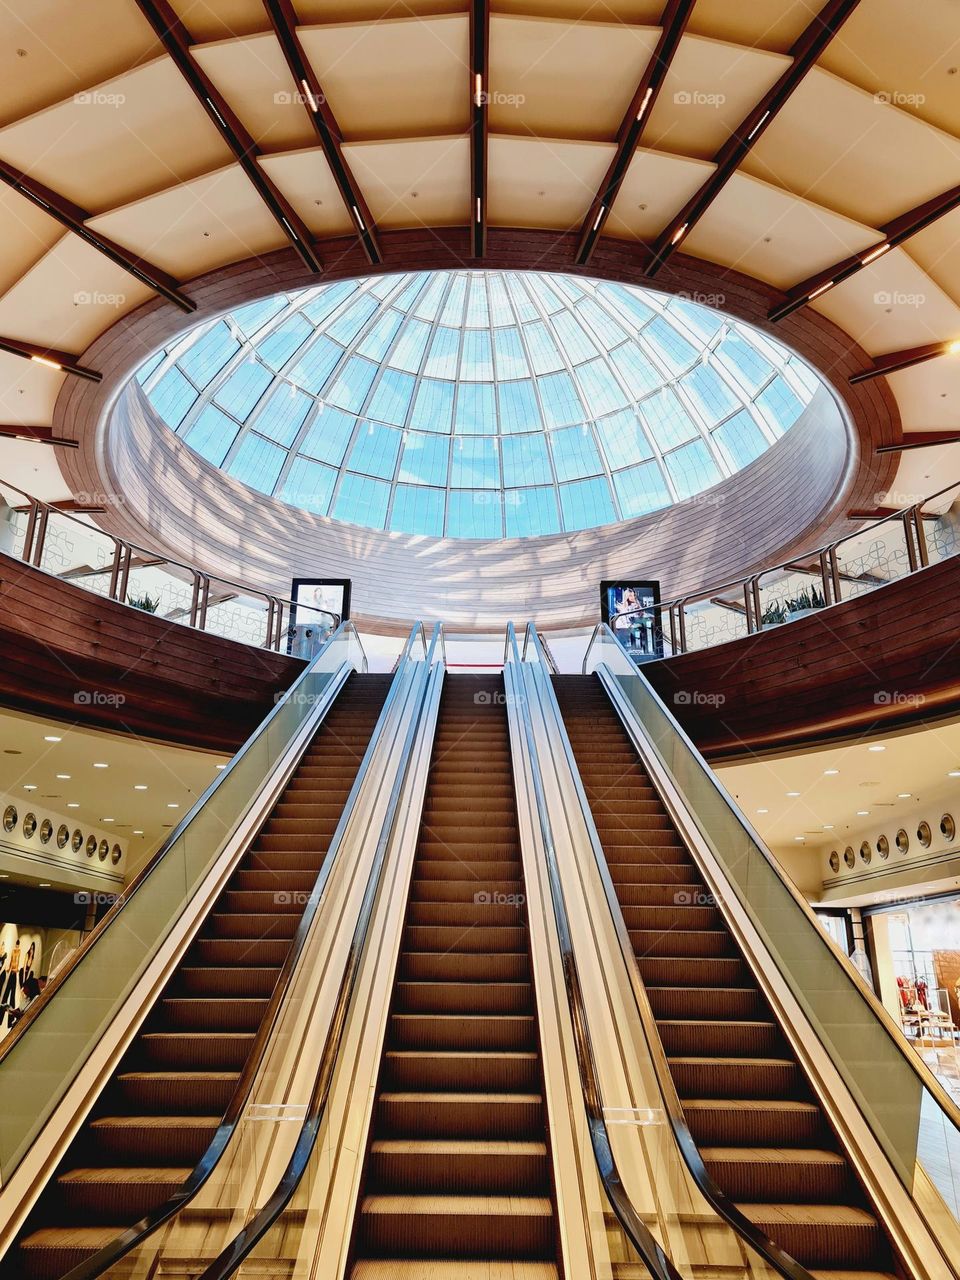 imposing and futuristic escalators with glass dome